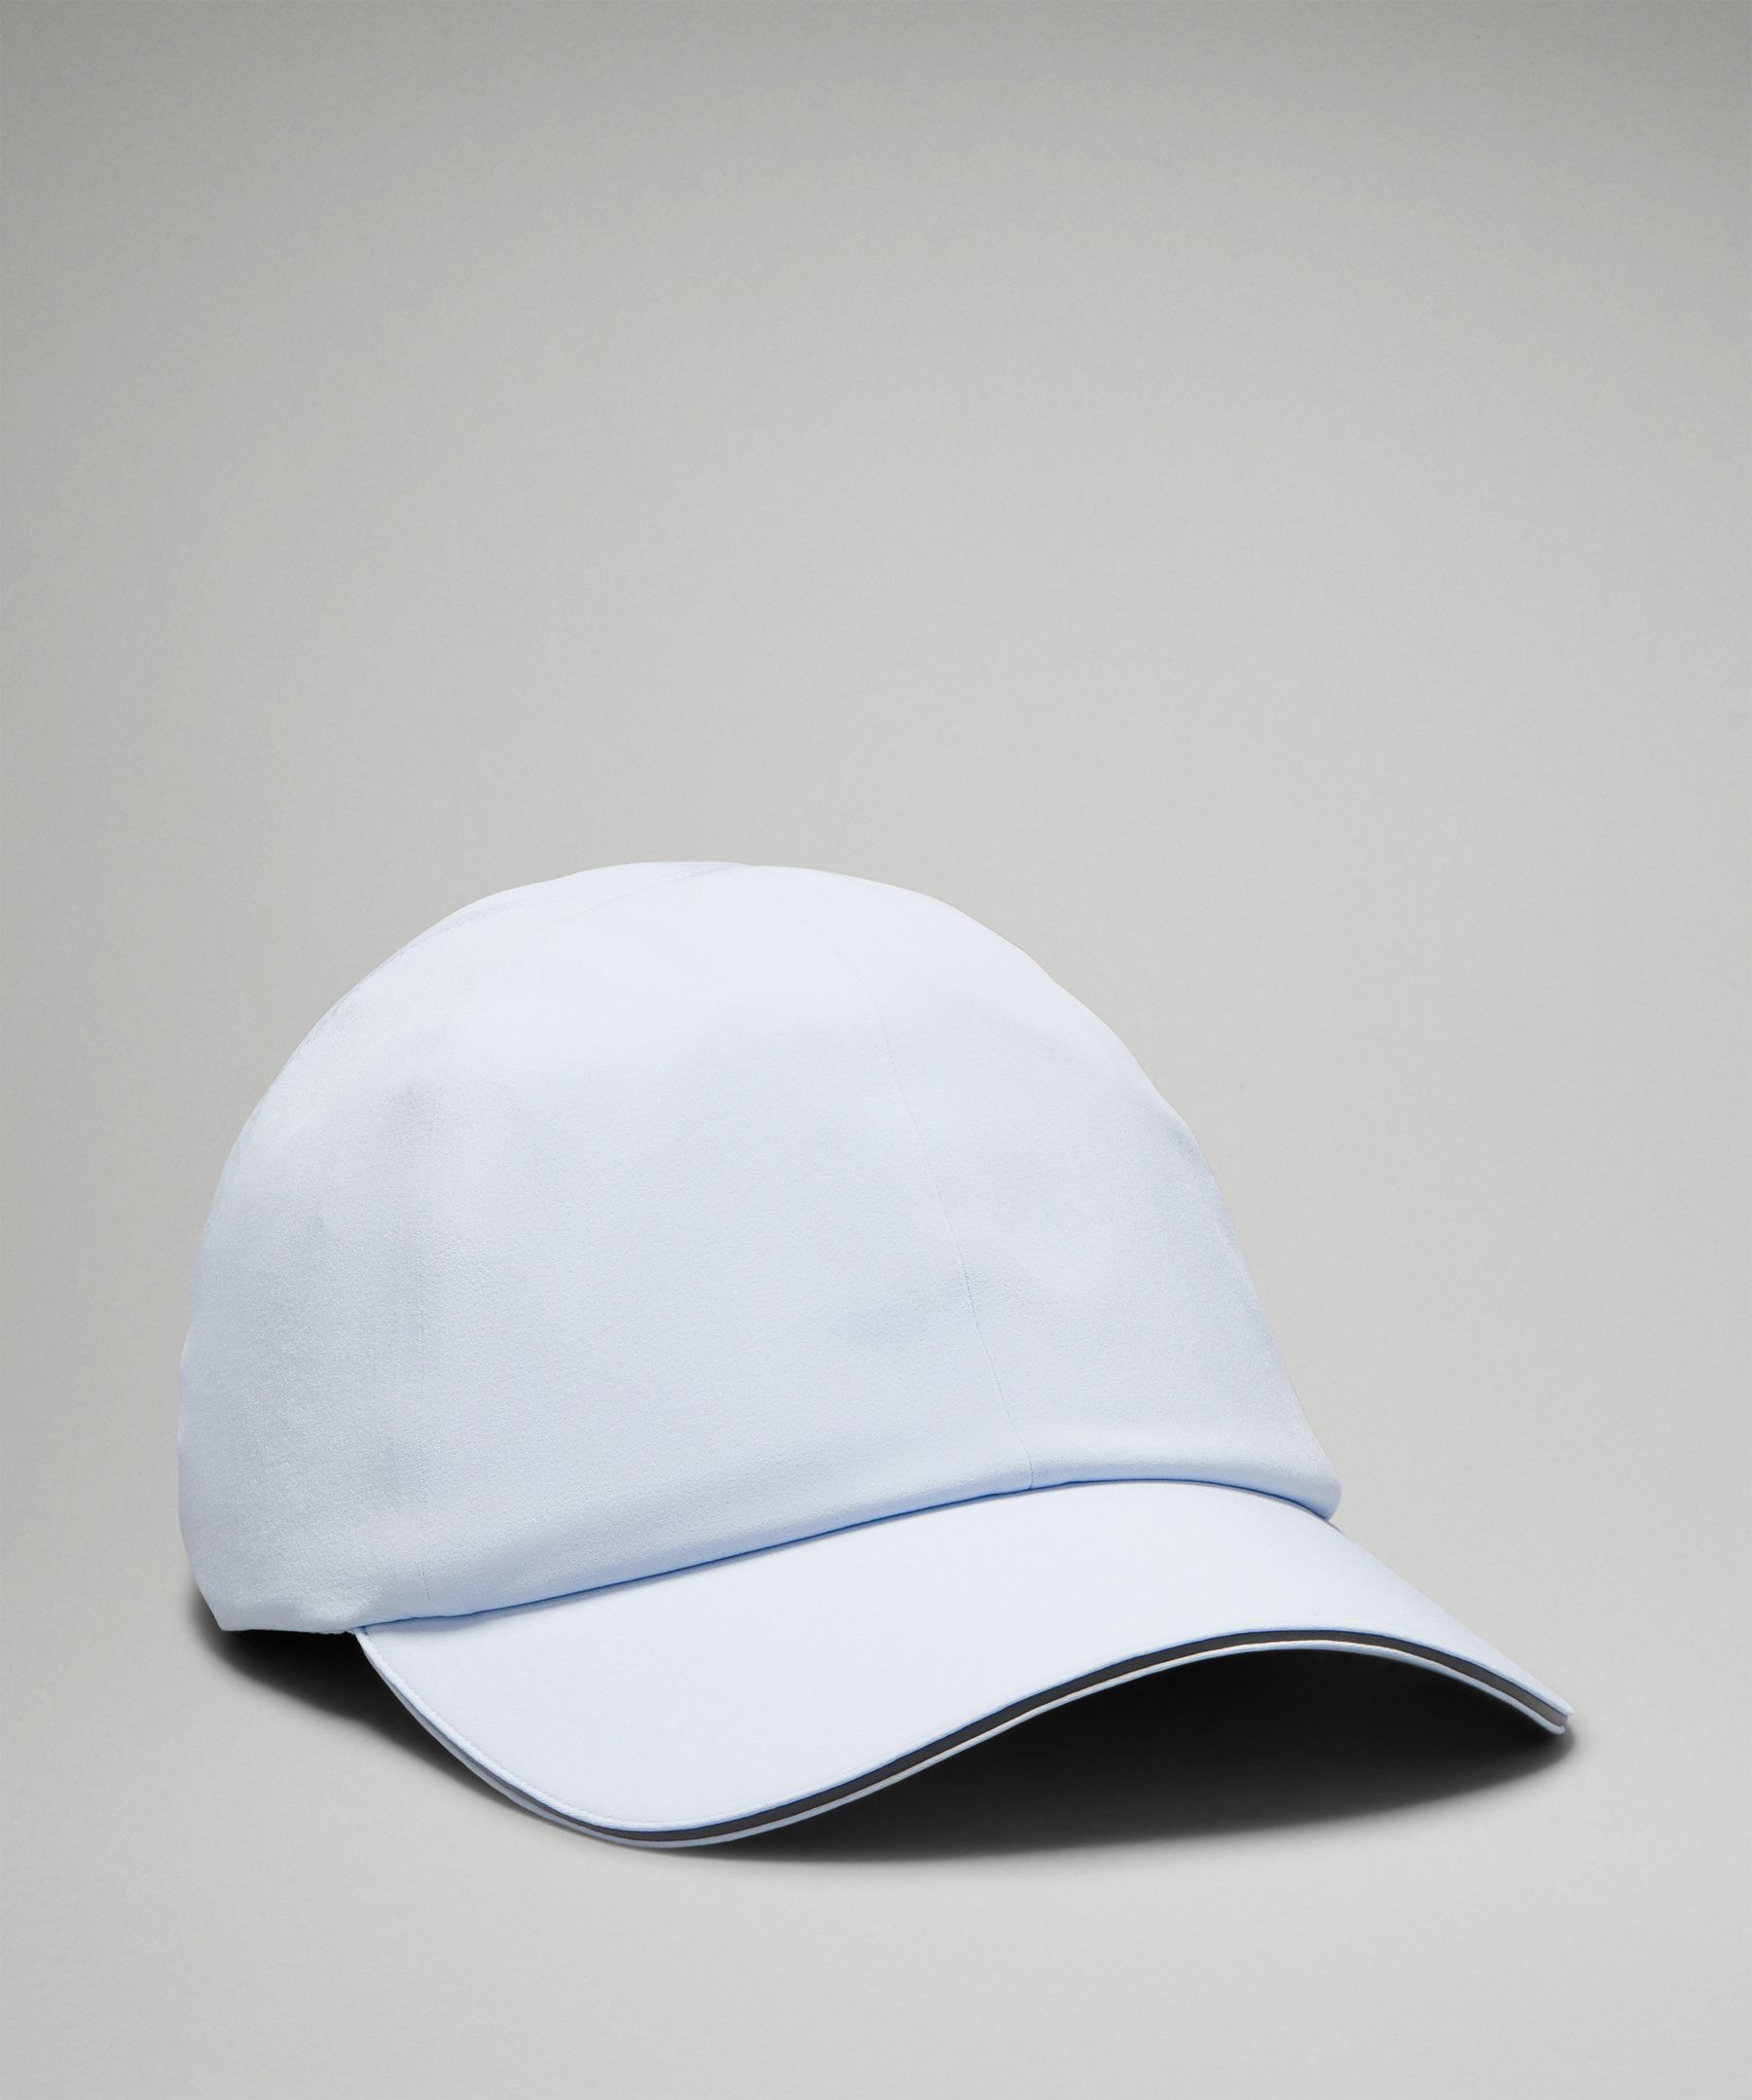 Lululemon hat New with tags original price 48  - Depop